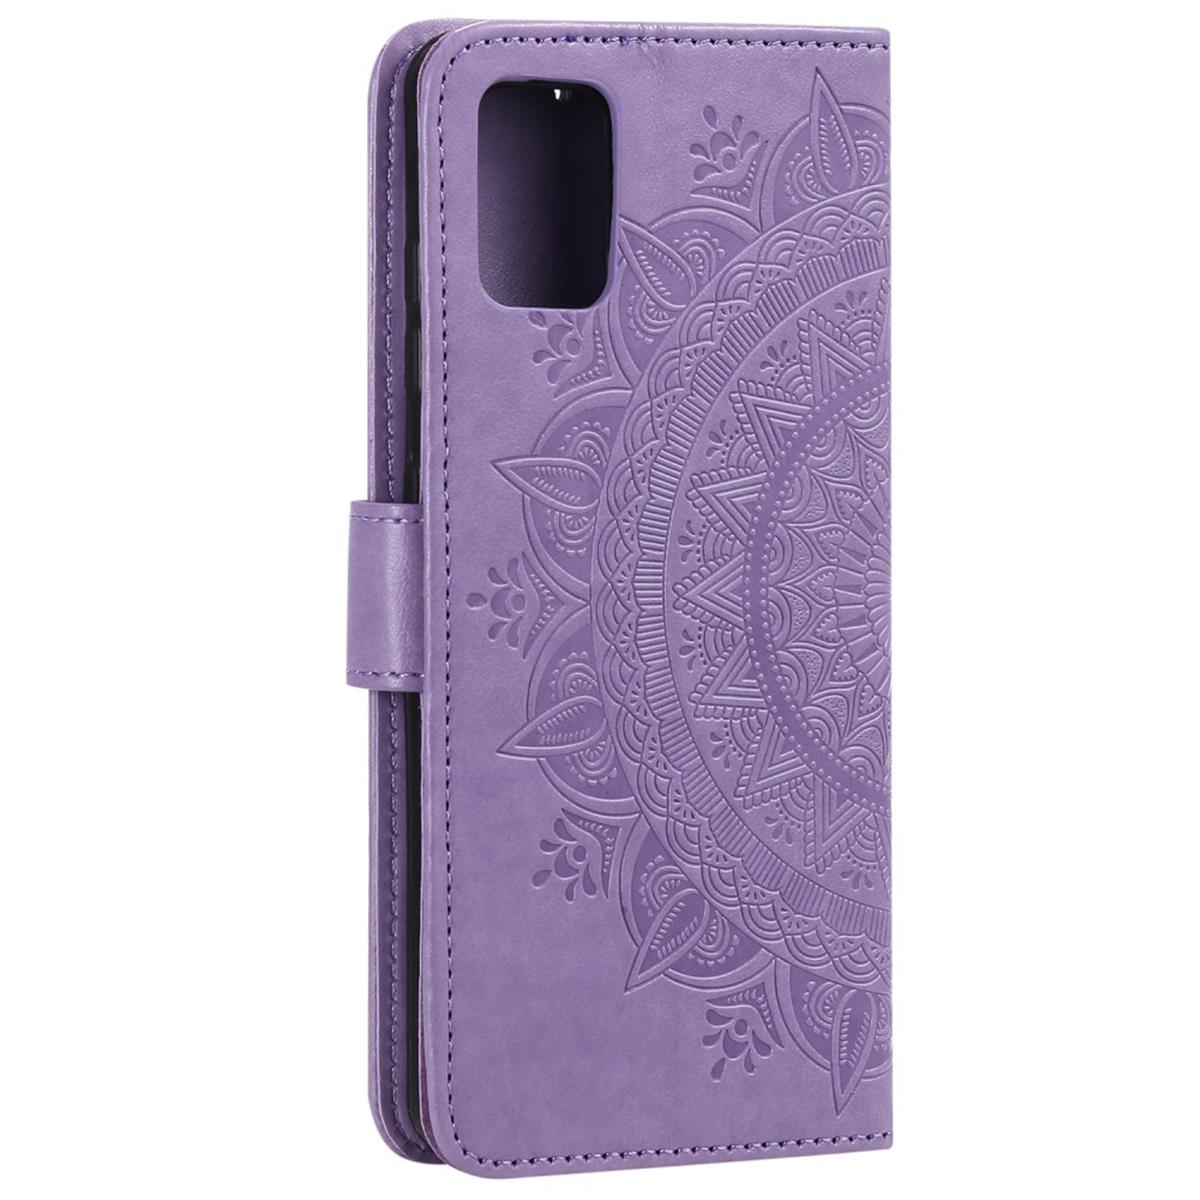 Hülle für Samsung Galaxy A51 Handyhülle Flip Case Schutzhülle Cover Mandala Lila